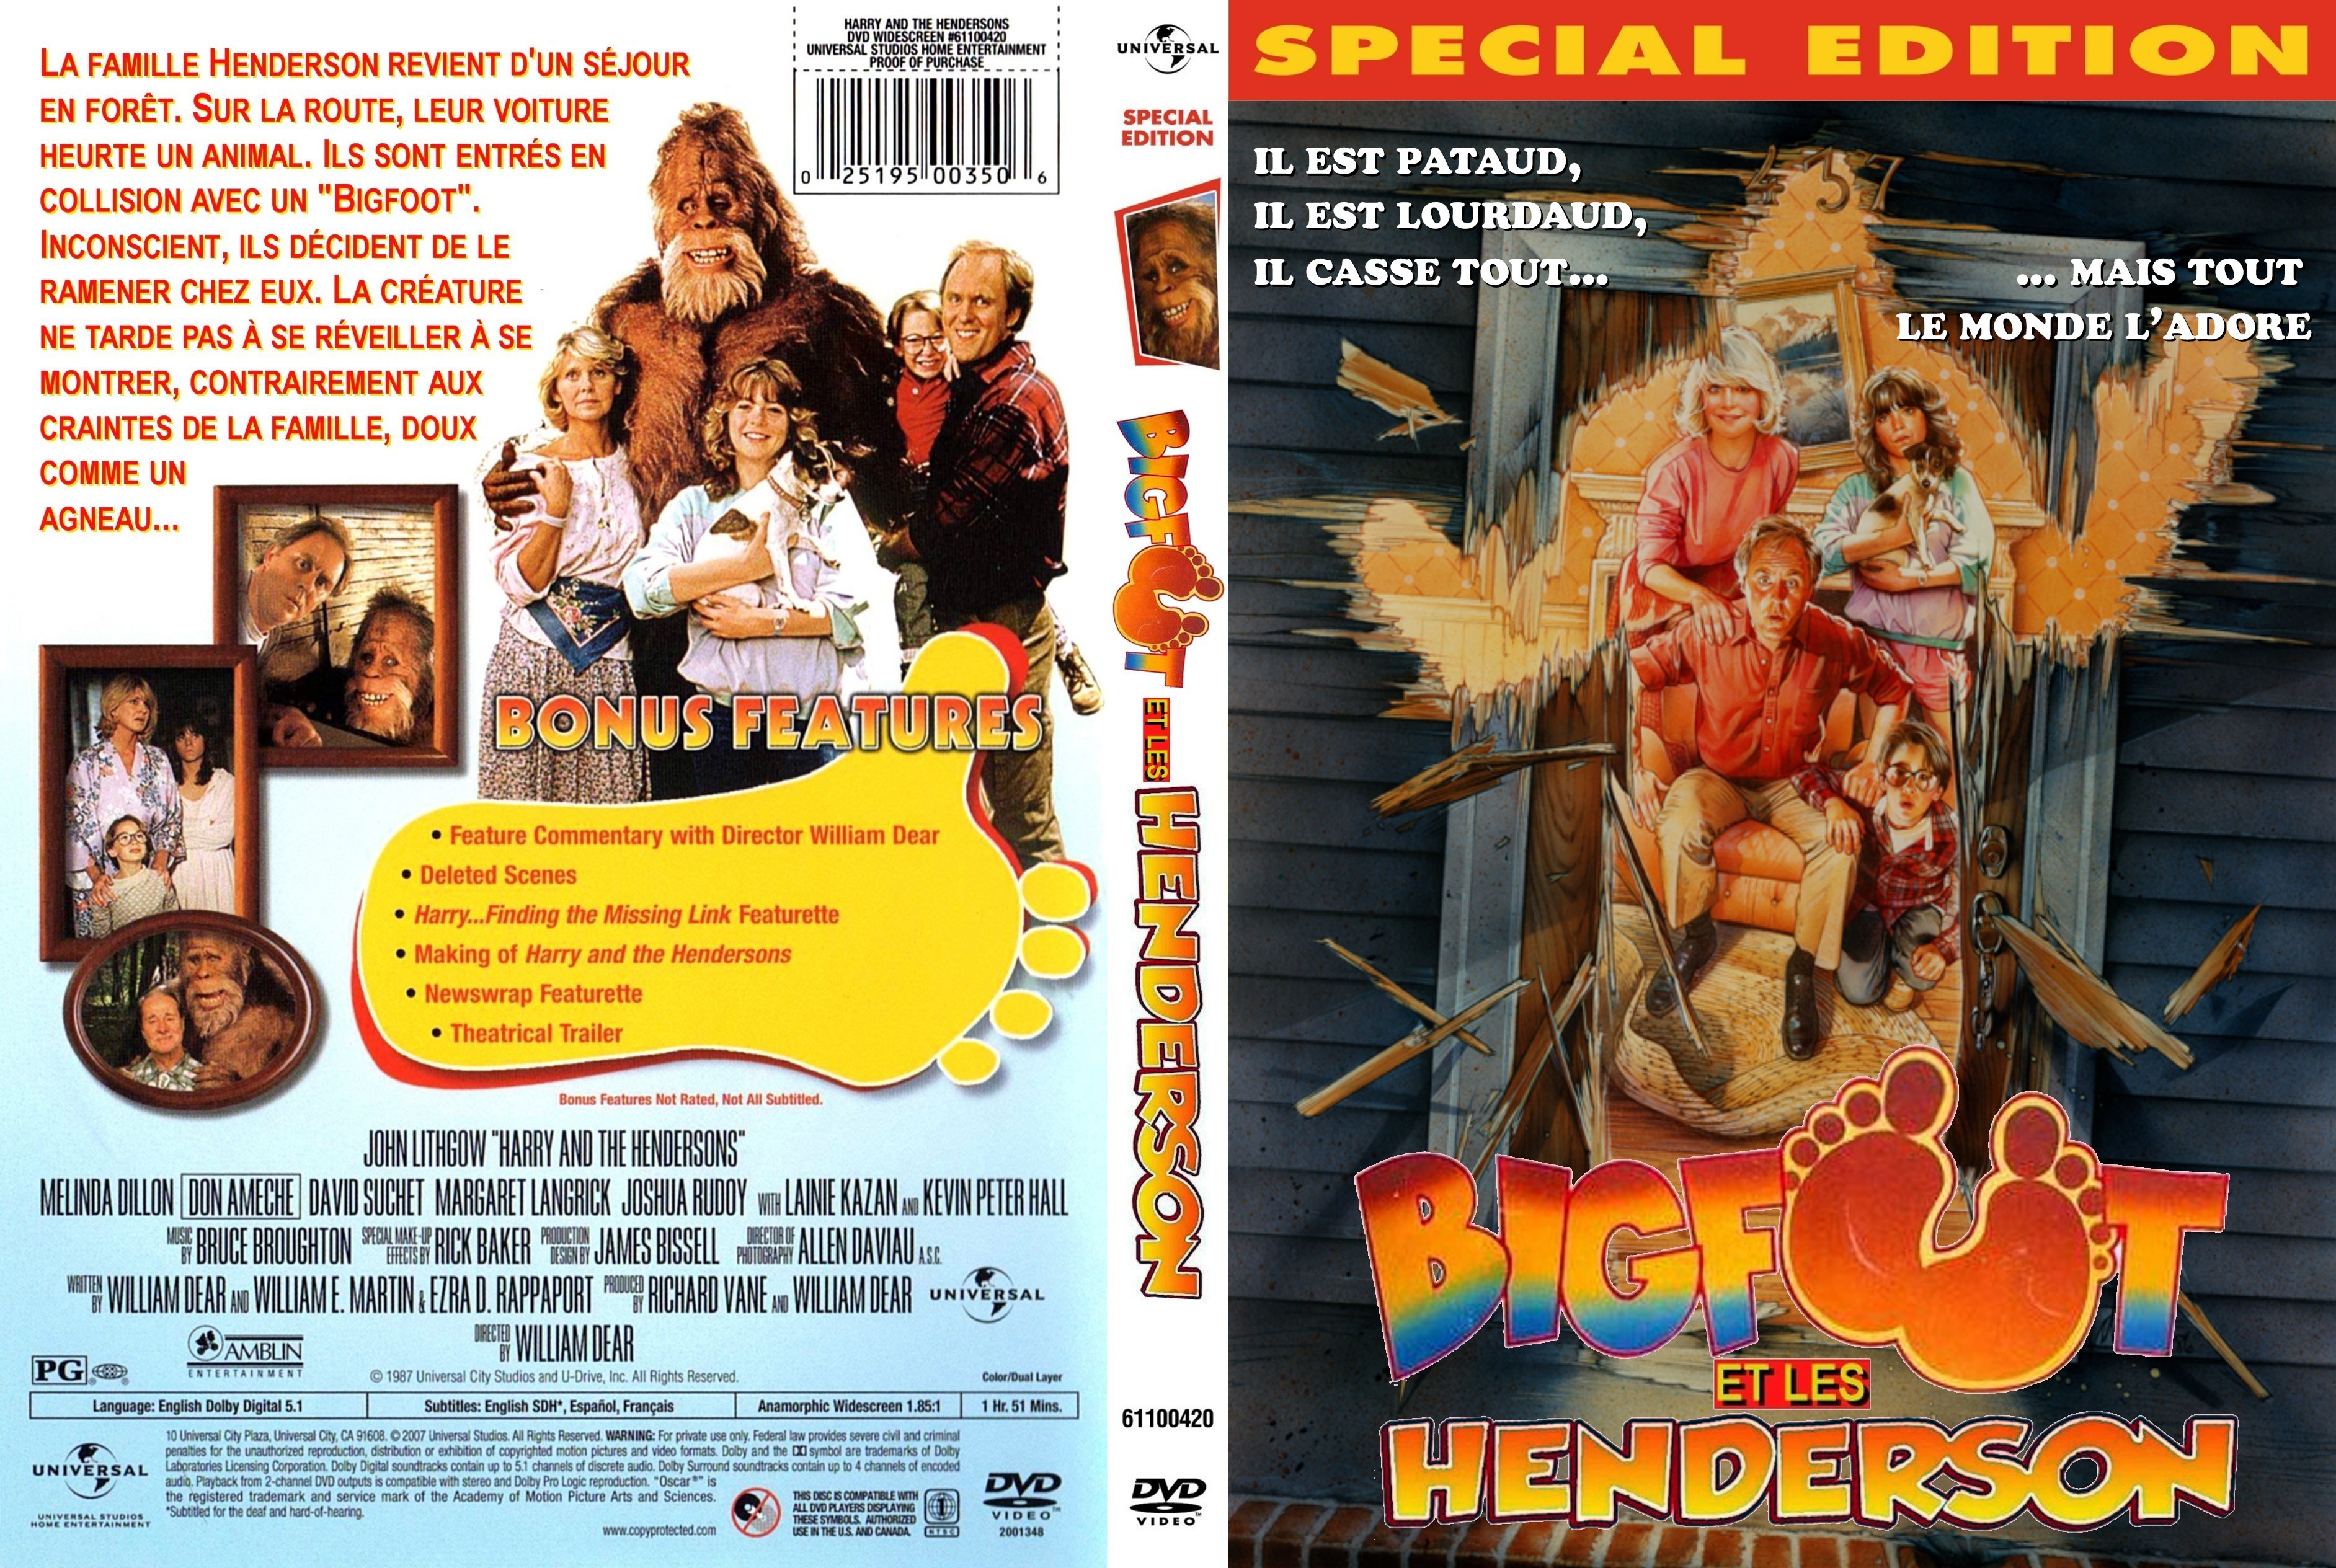 Jaquette DVD Bigfoot et les Henderson custom v2